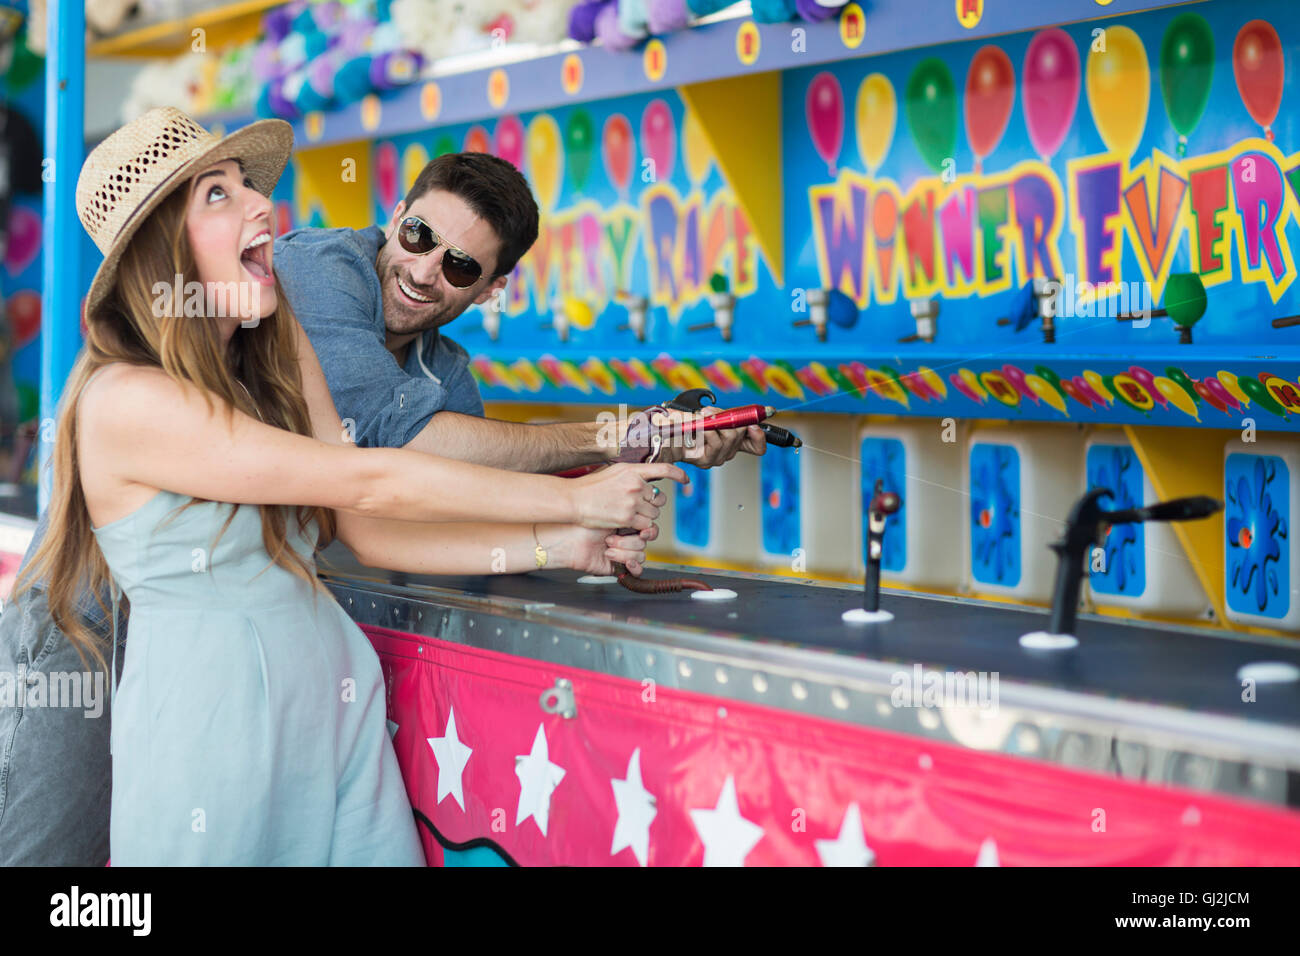 Couple at fairground shooting gallery, Coney island, Brooklyn, New York, USA Stock Photo